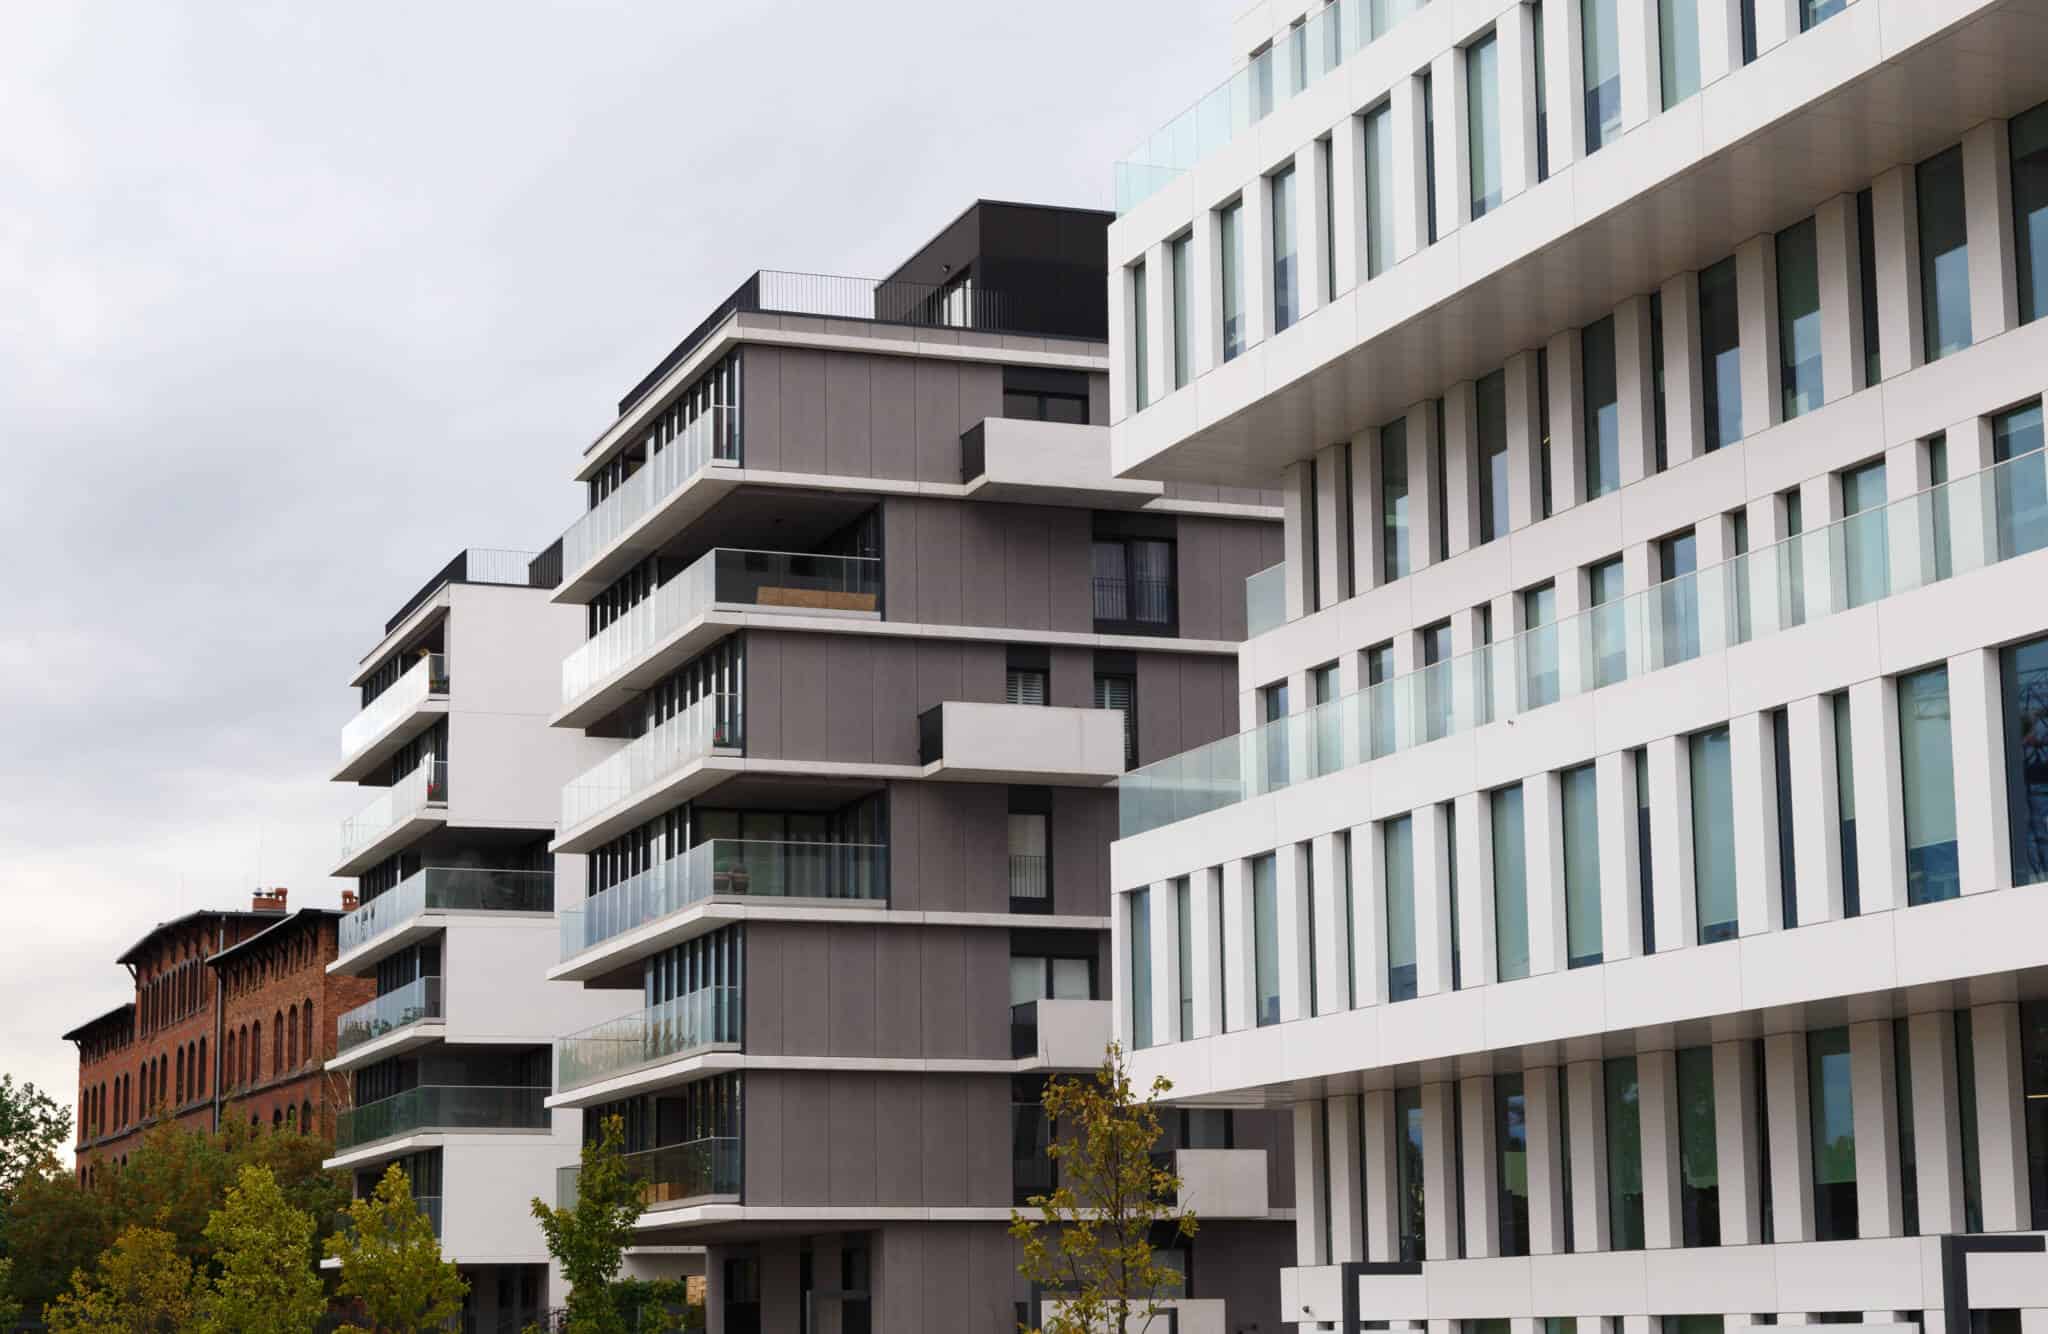 Facades of modern apartment buildings